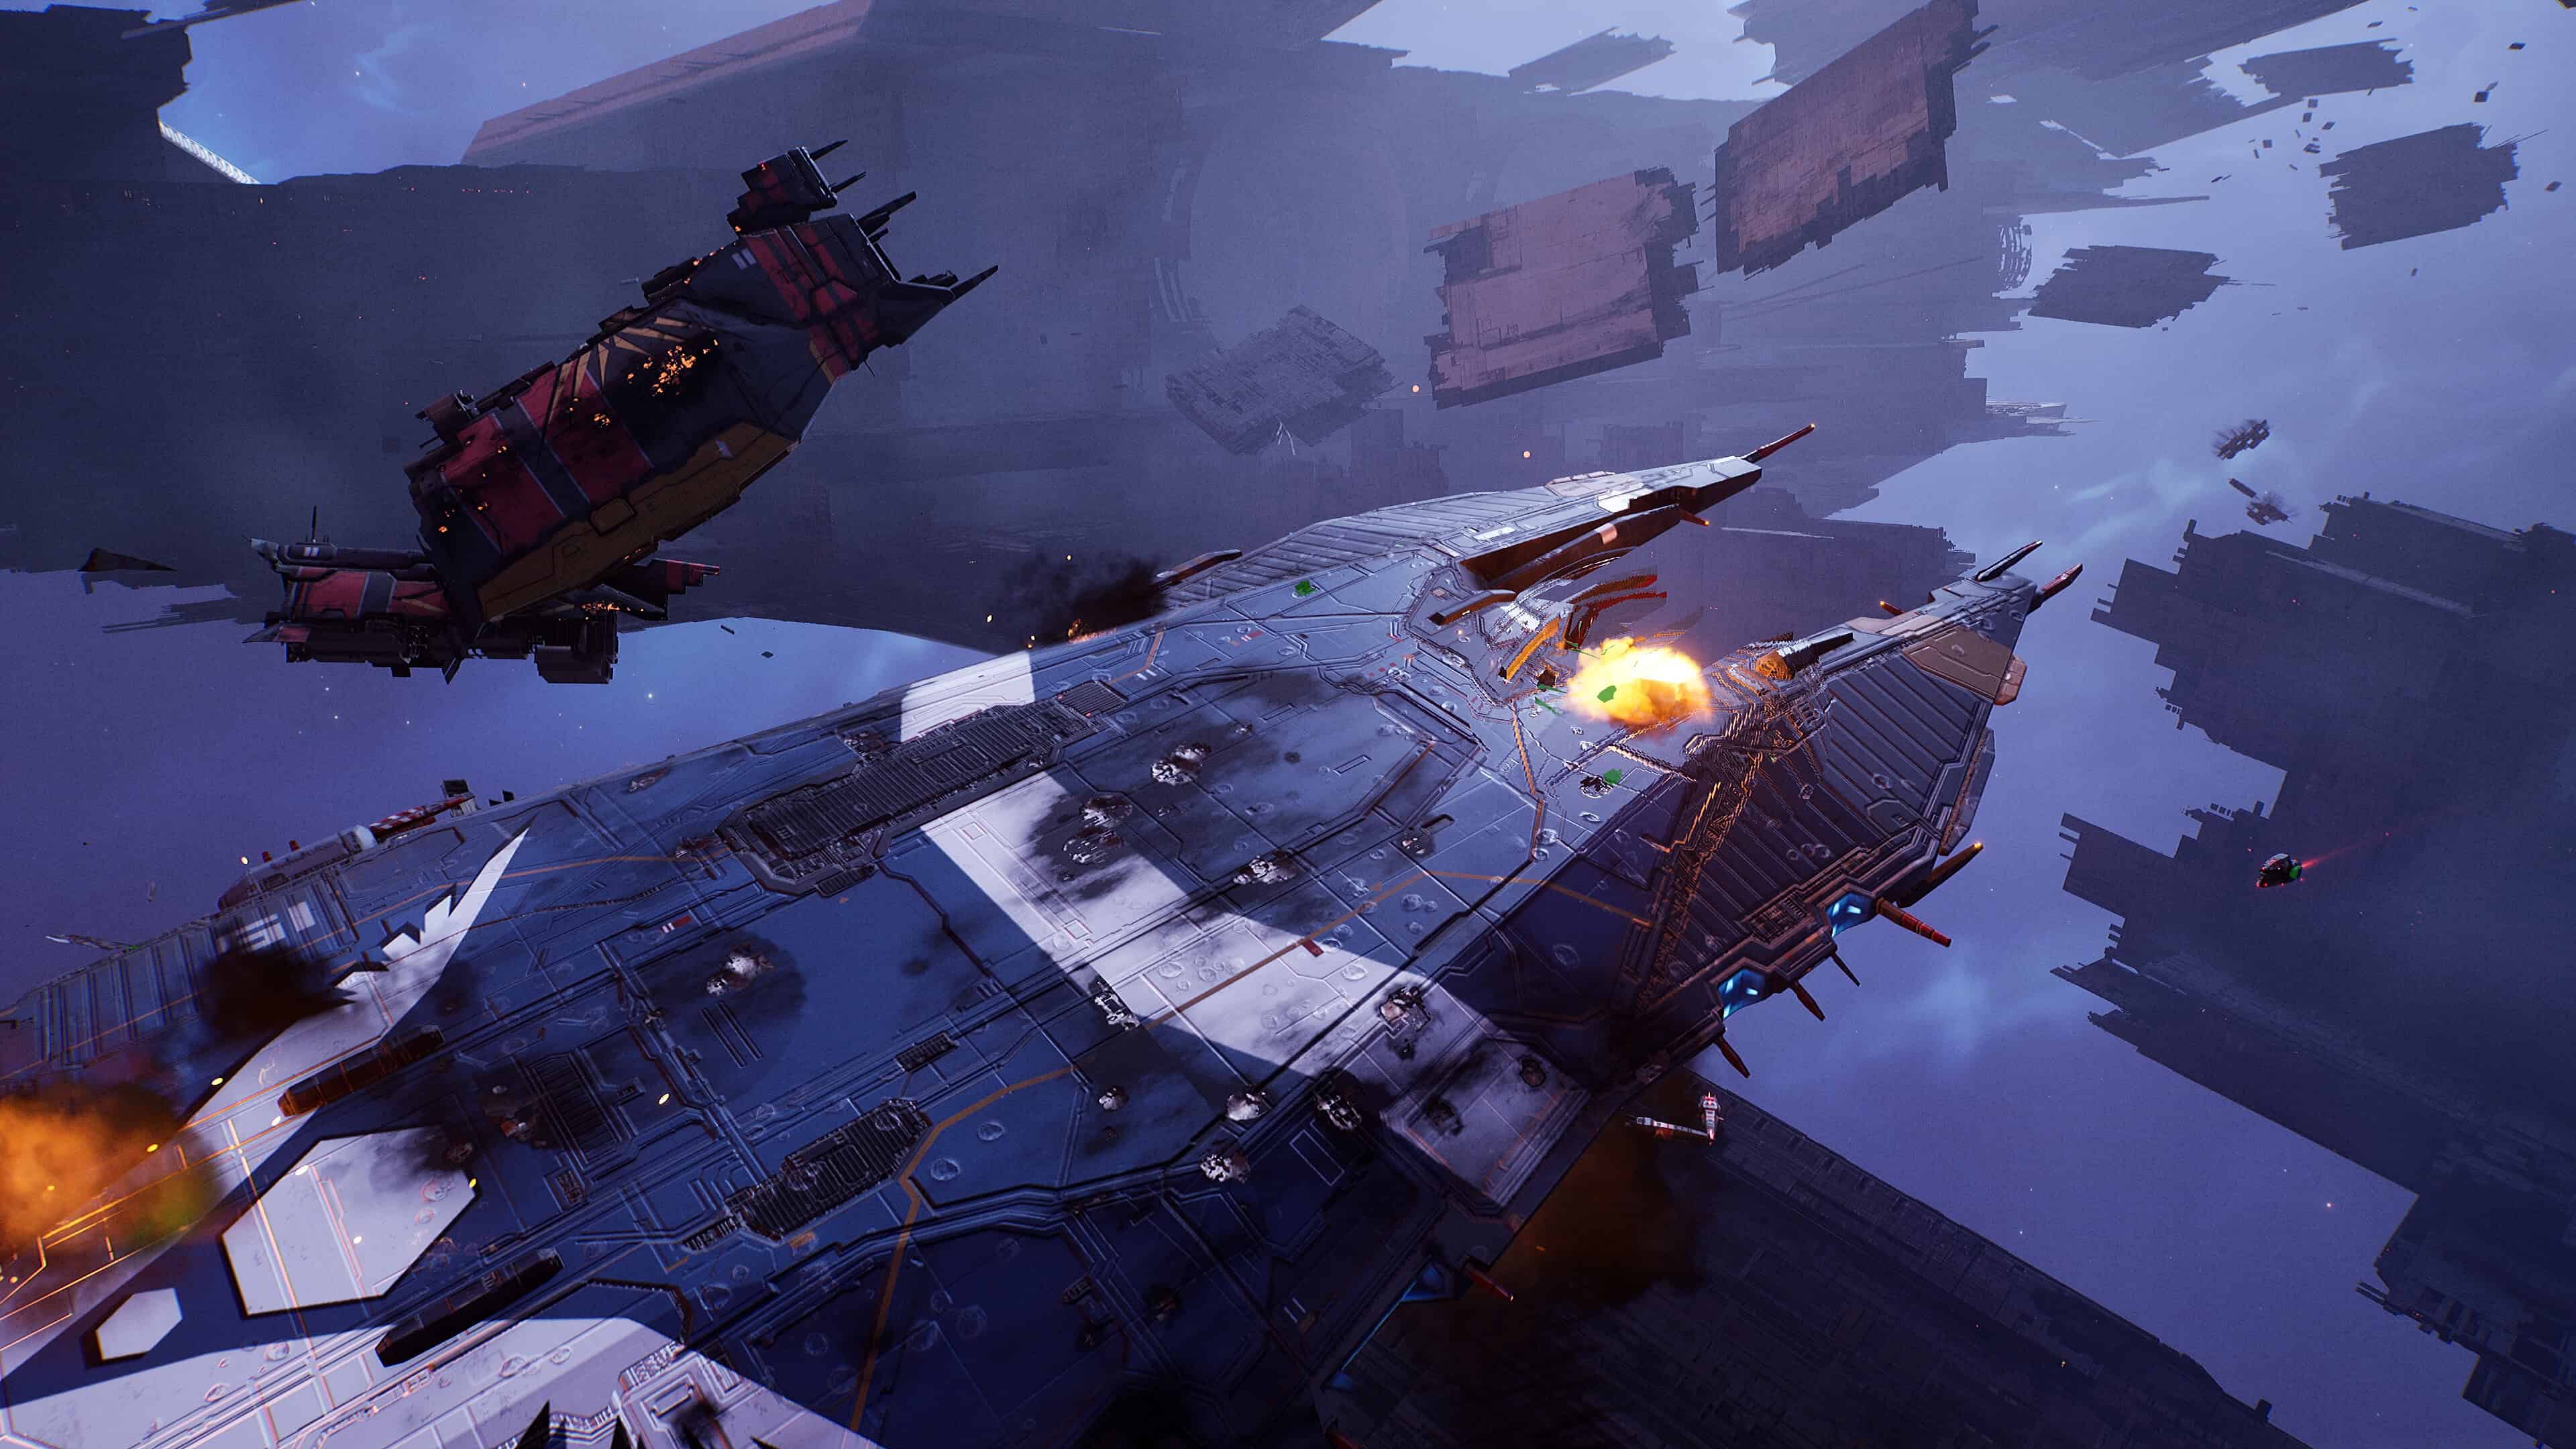 homeworld 3 release date start time - a ship flies through space during a battle